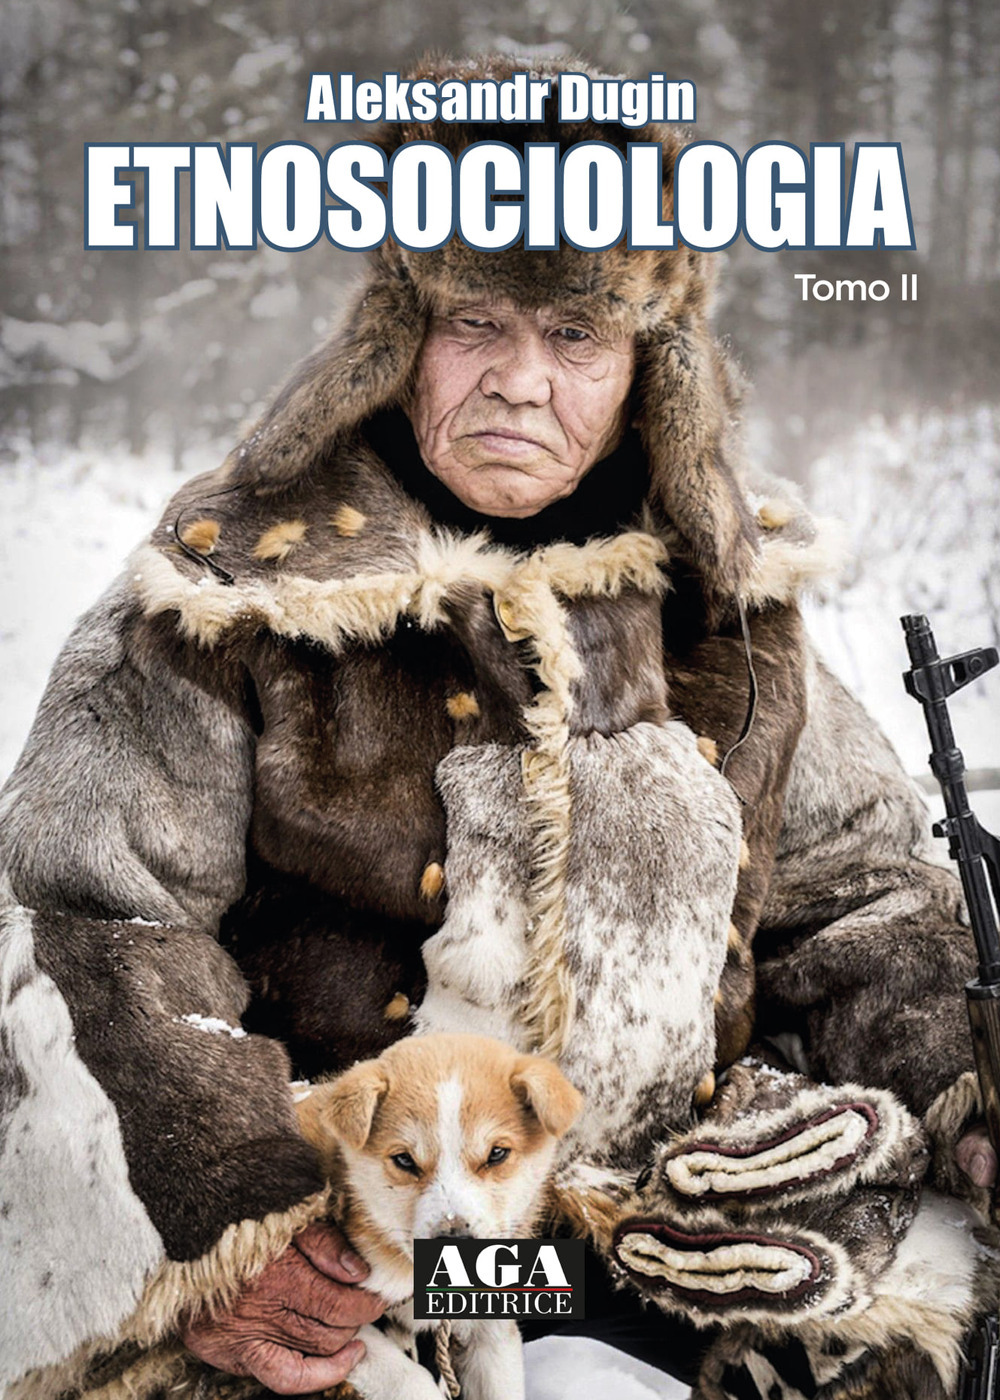 Etnosociologia